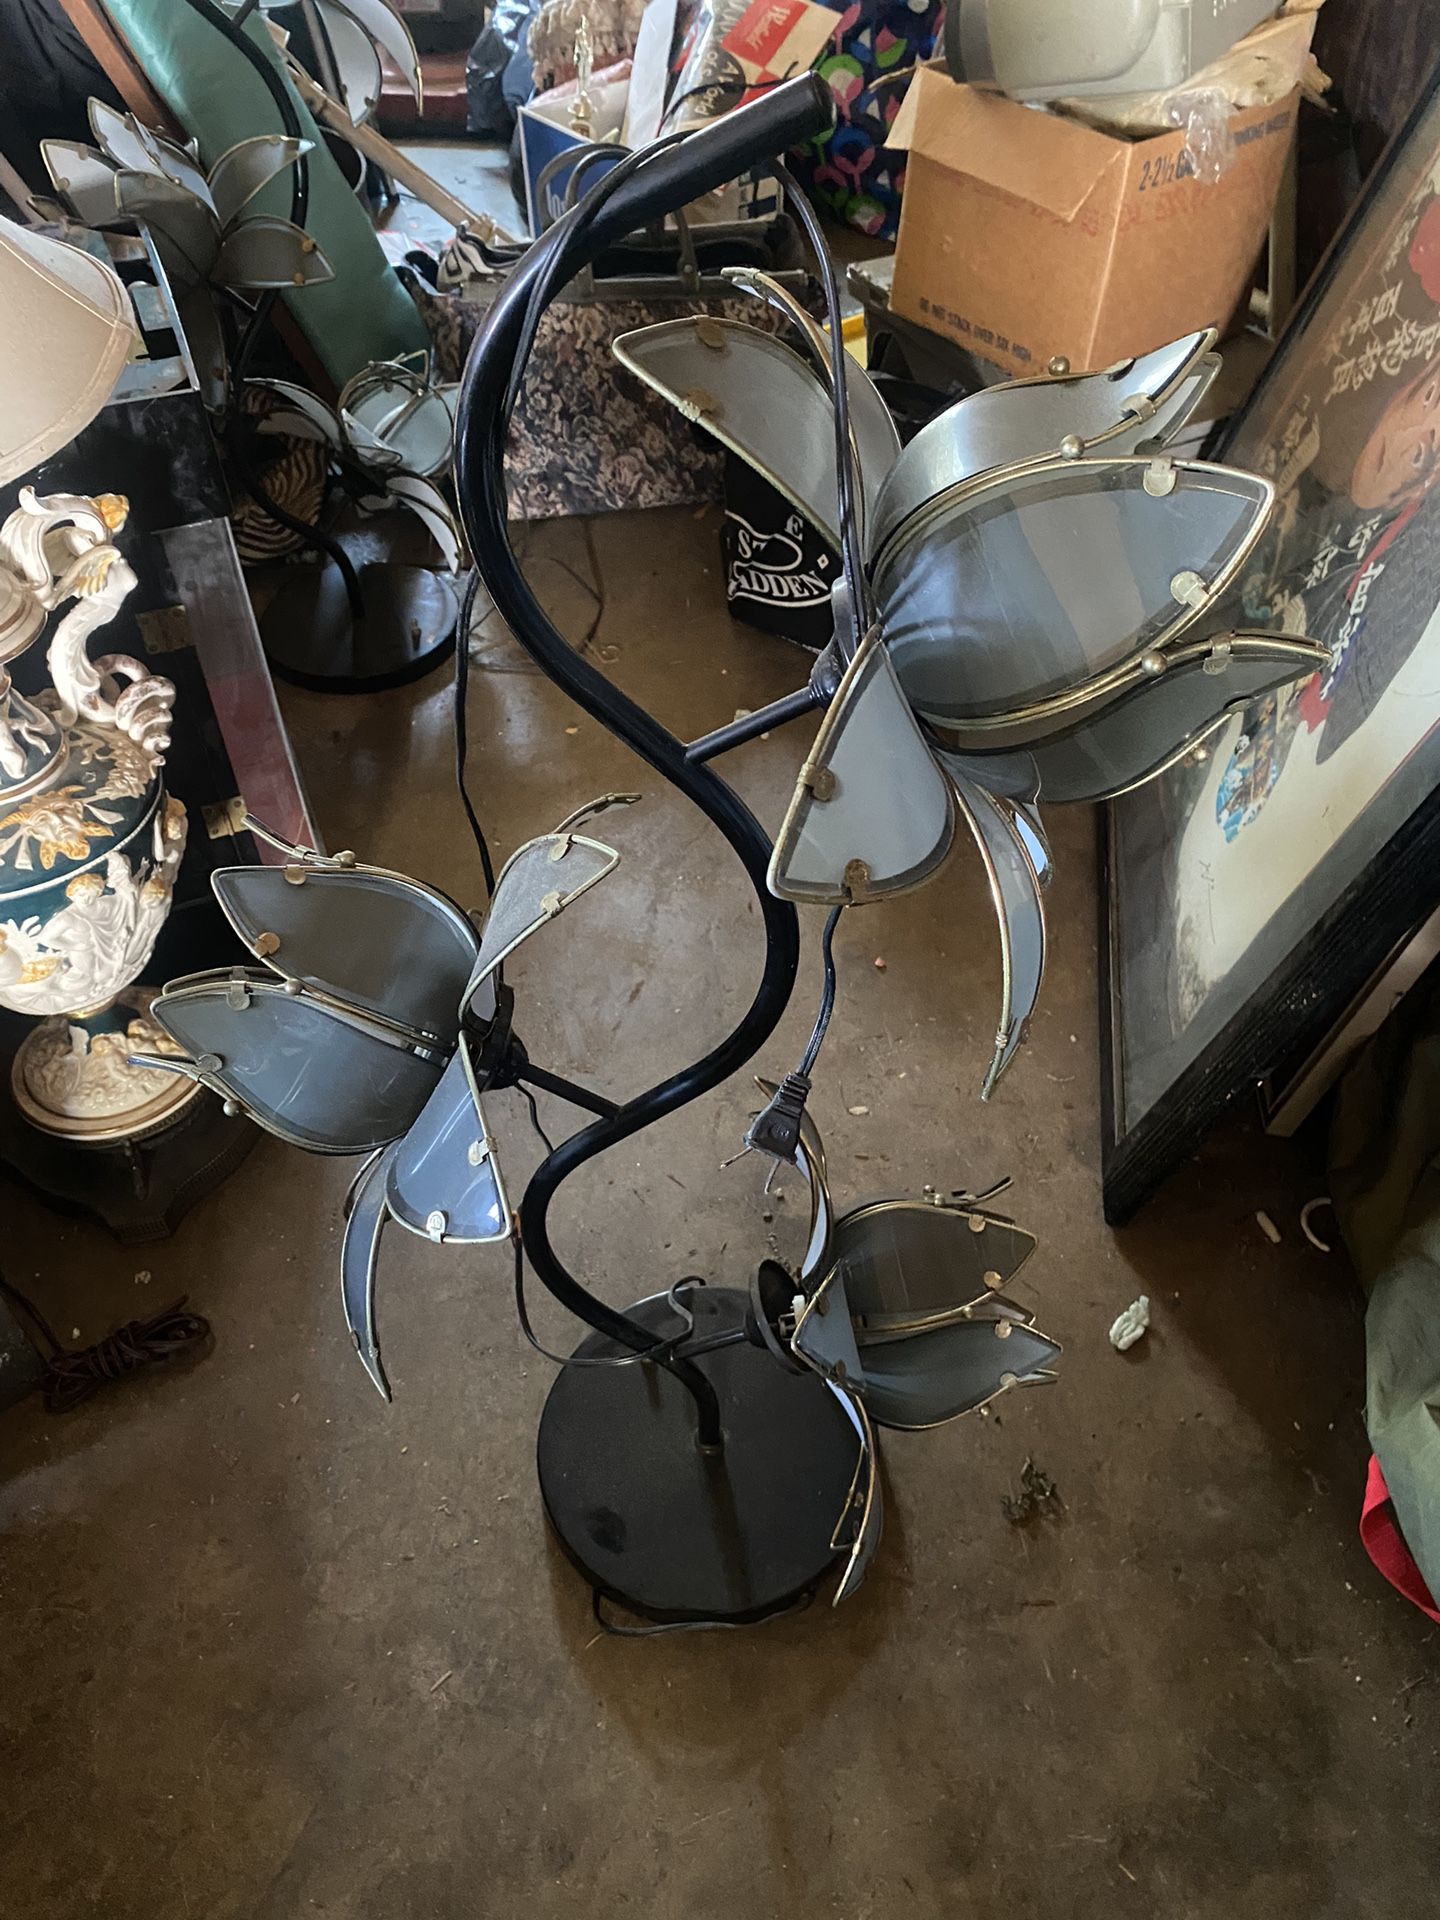 (Not Free Make Offer) Vintage Lamps